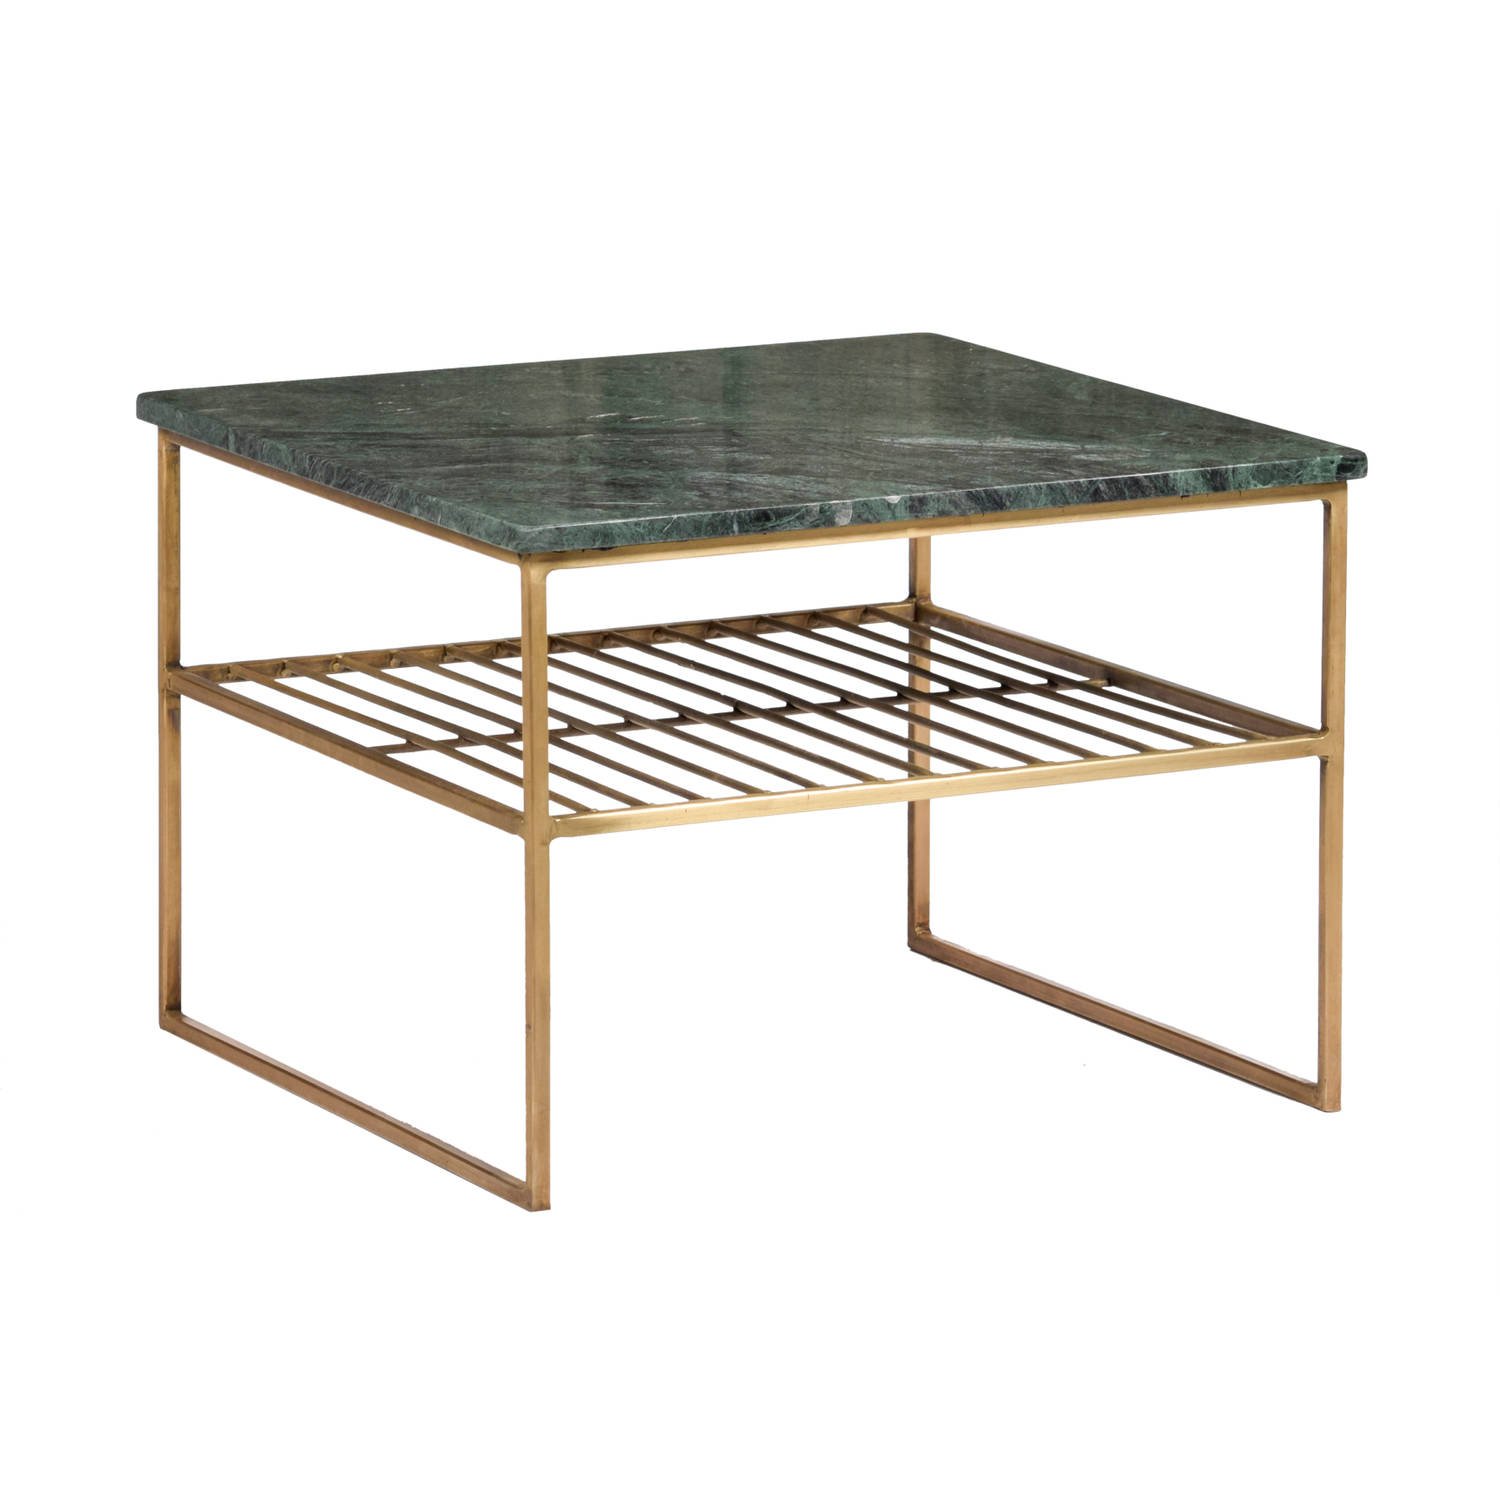 Wants&Needs Furniture Salontafel Dian Marble Groen Goud 40 x 55 x 55